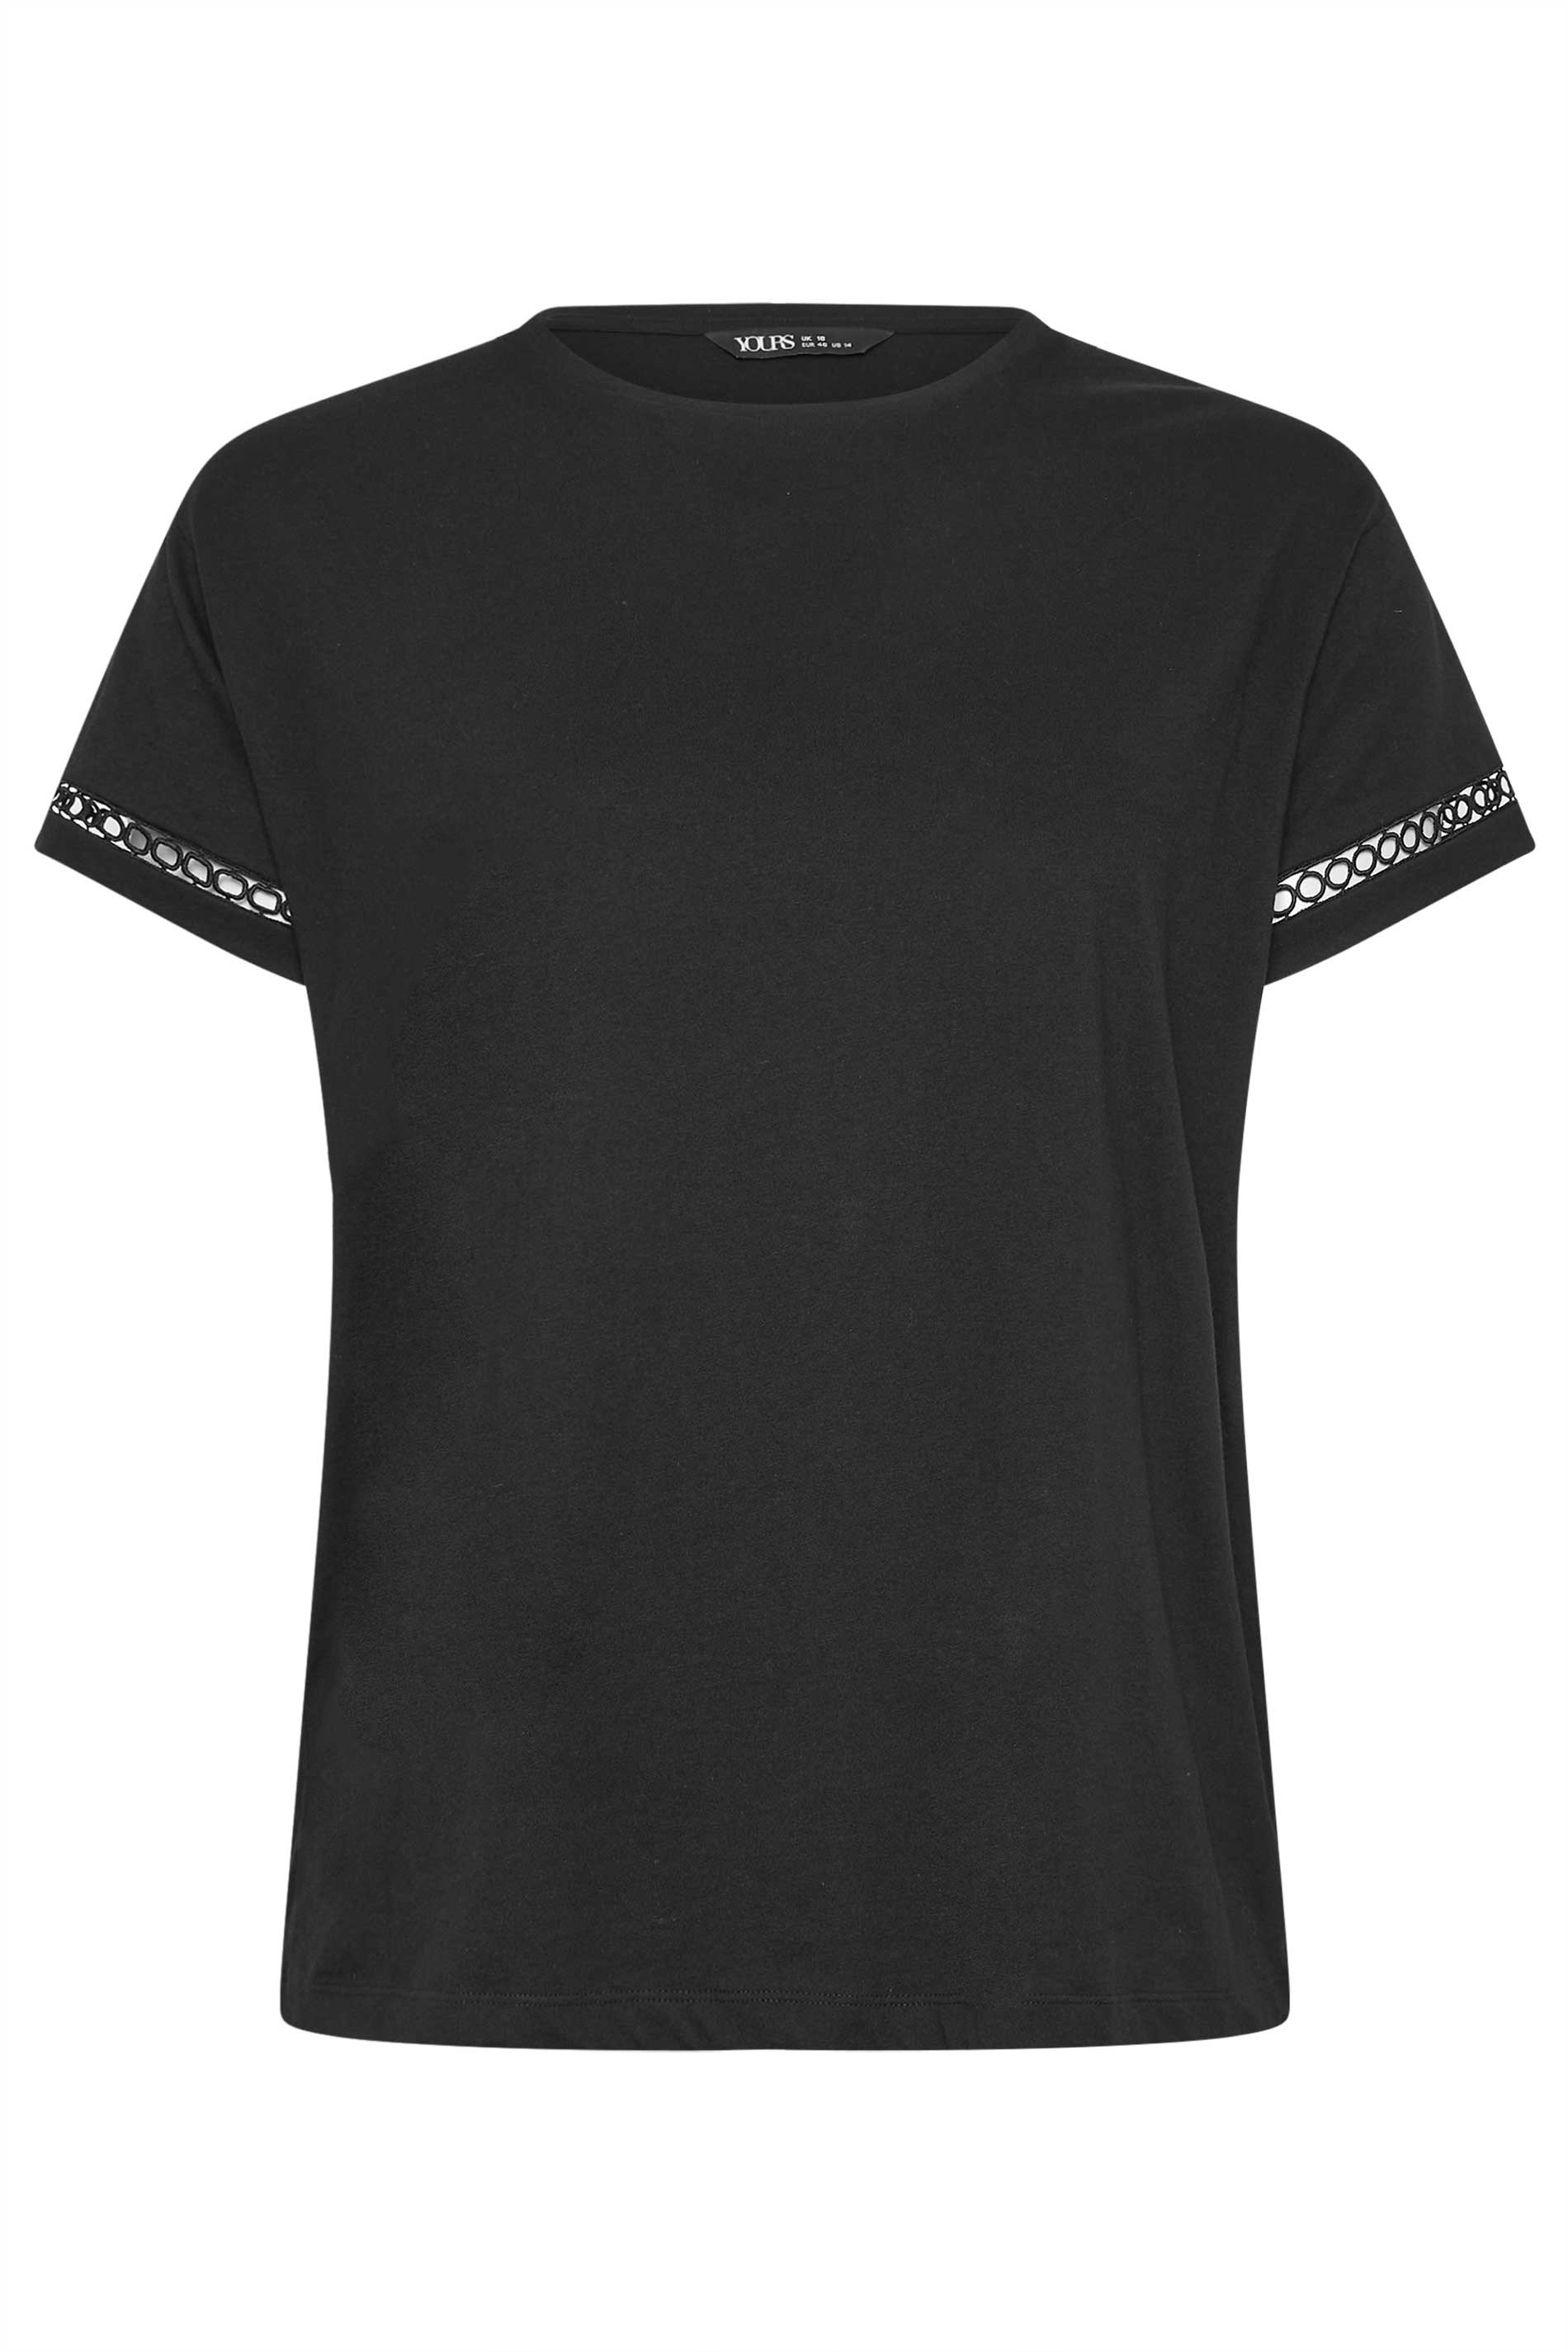 Buy Black Short Sleeve Crochet Crew Neck T-Shirt from the Next UK